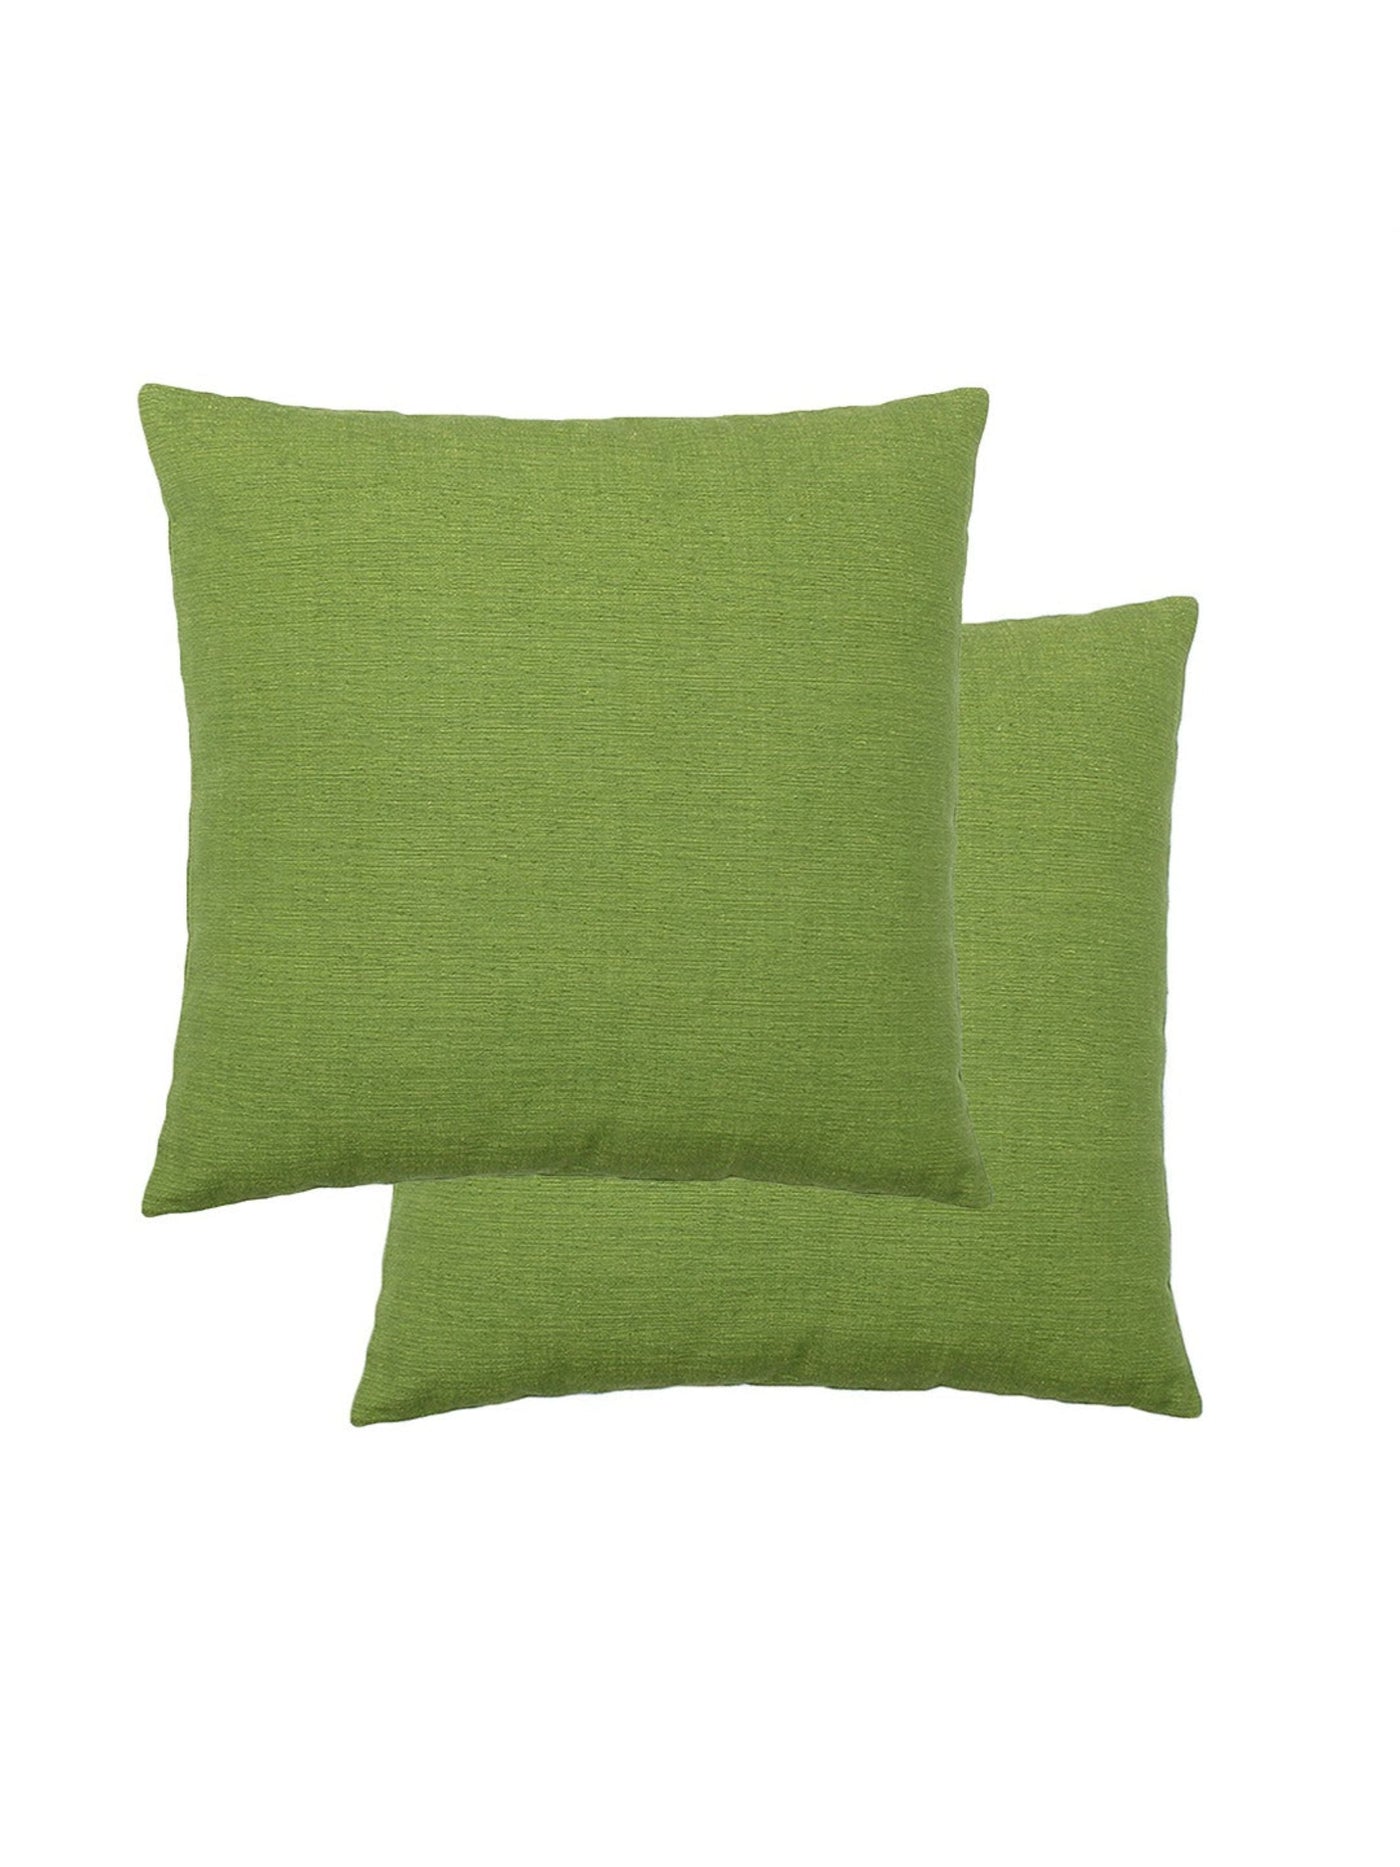 2 Cushion Covers - 2 s-8903773000944